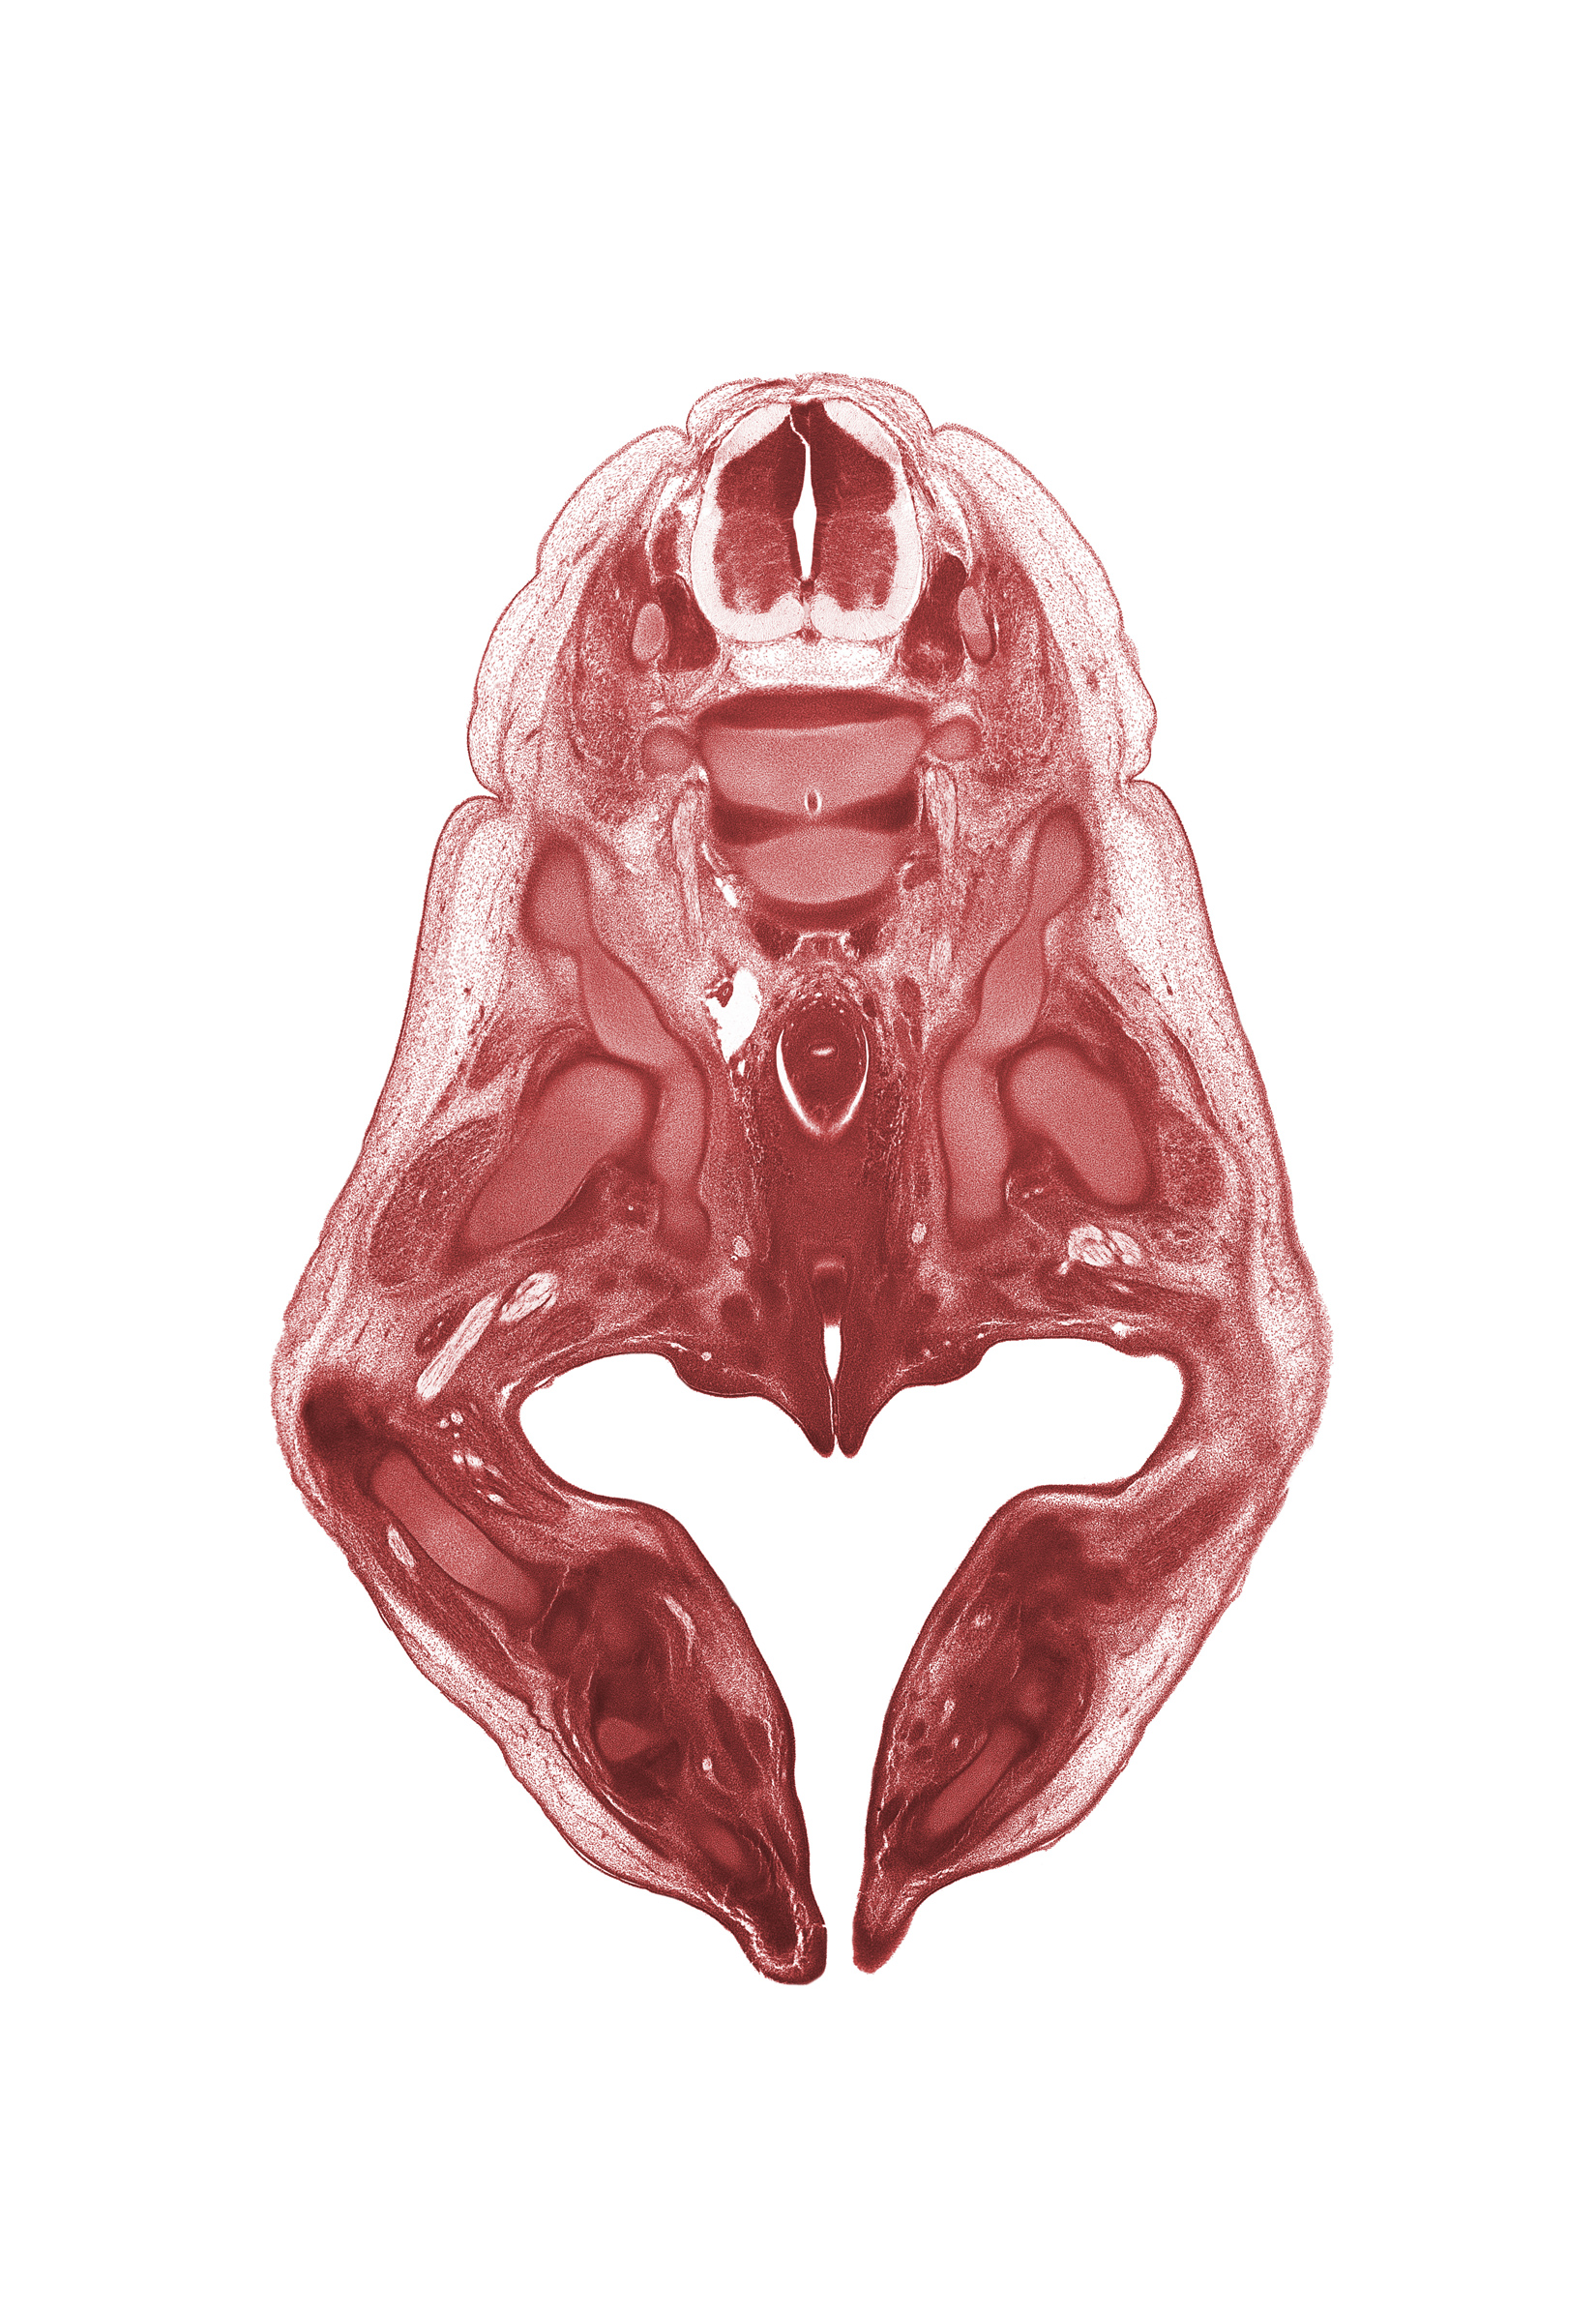 L-3 spinal ganglion, common iliac artery, femoral nerve, hip joint, ischiorectal fossa, ischium, labial swelling, labium minor, lumbosacral trunk, metatarsal(s), neural arch, peritoneal cavity, plantar surface of foot, pudendal nerve, rectum, sciatic nerve, tarsal region, tibia, tibial nerve, urethra, vaginal vestibule